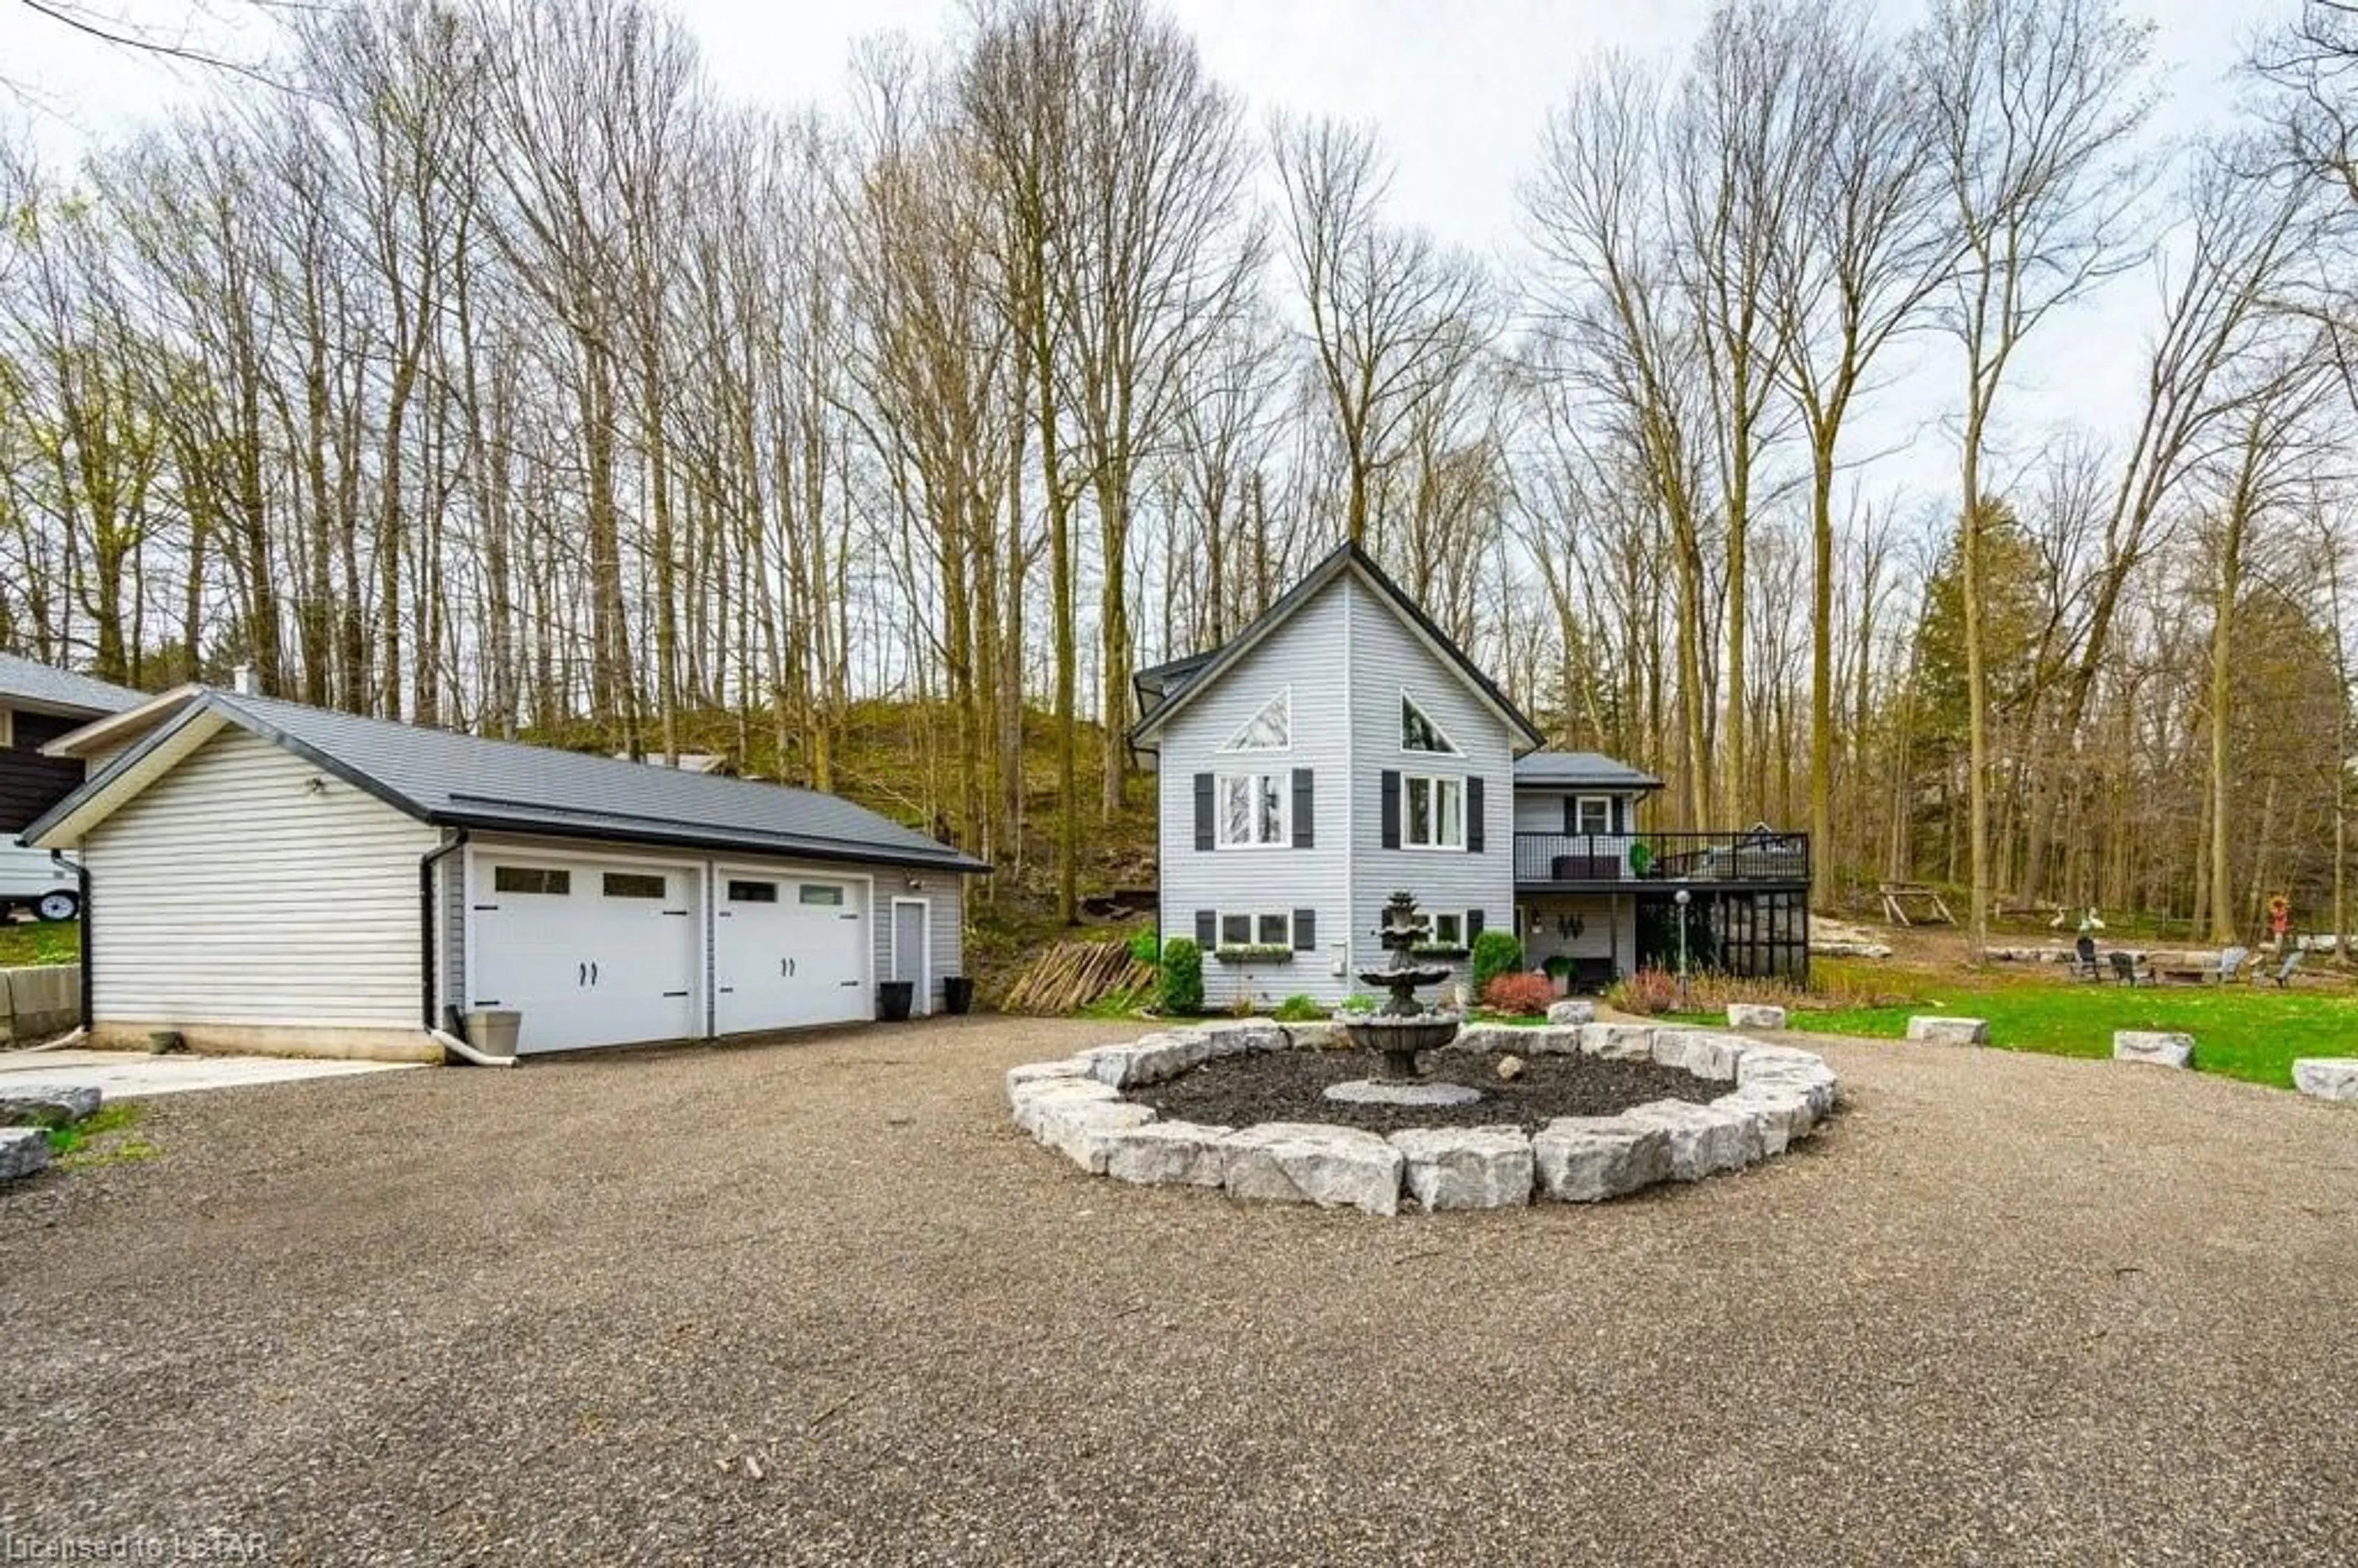 Cottage for 476 Lake Rosalind Rd 4, Hanover Ontario N4N 3B9